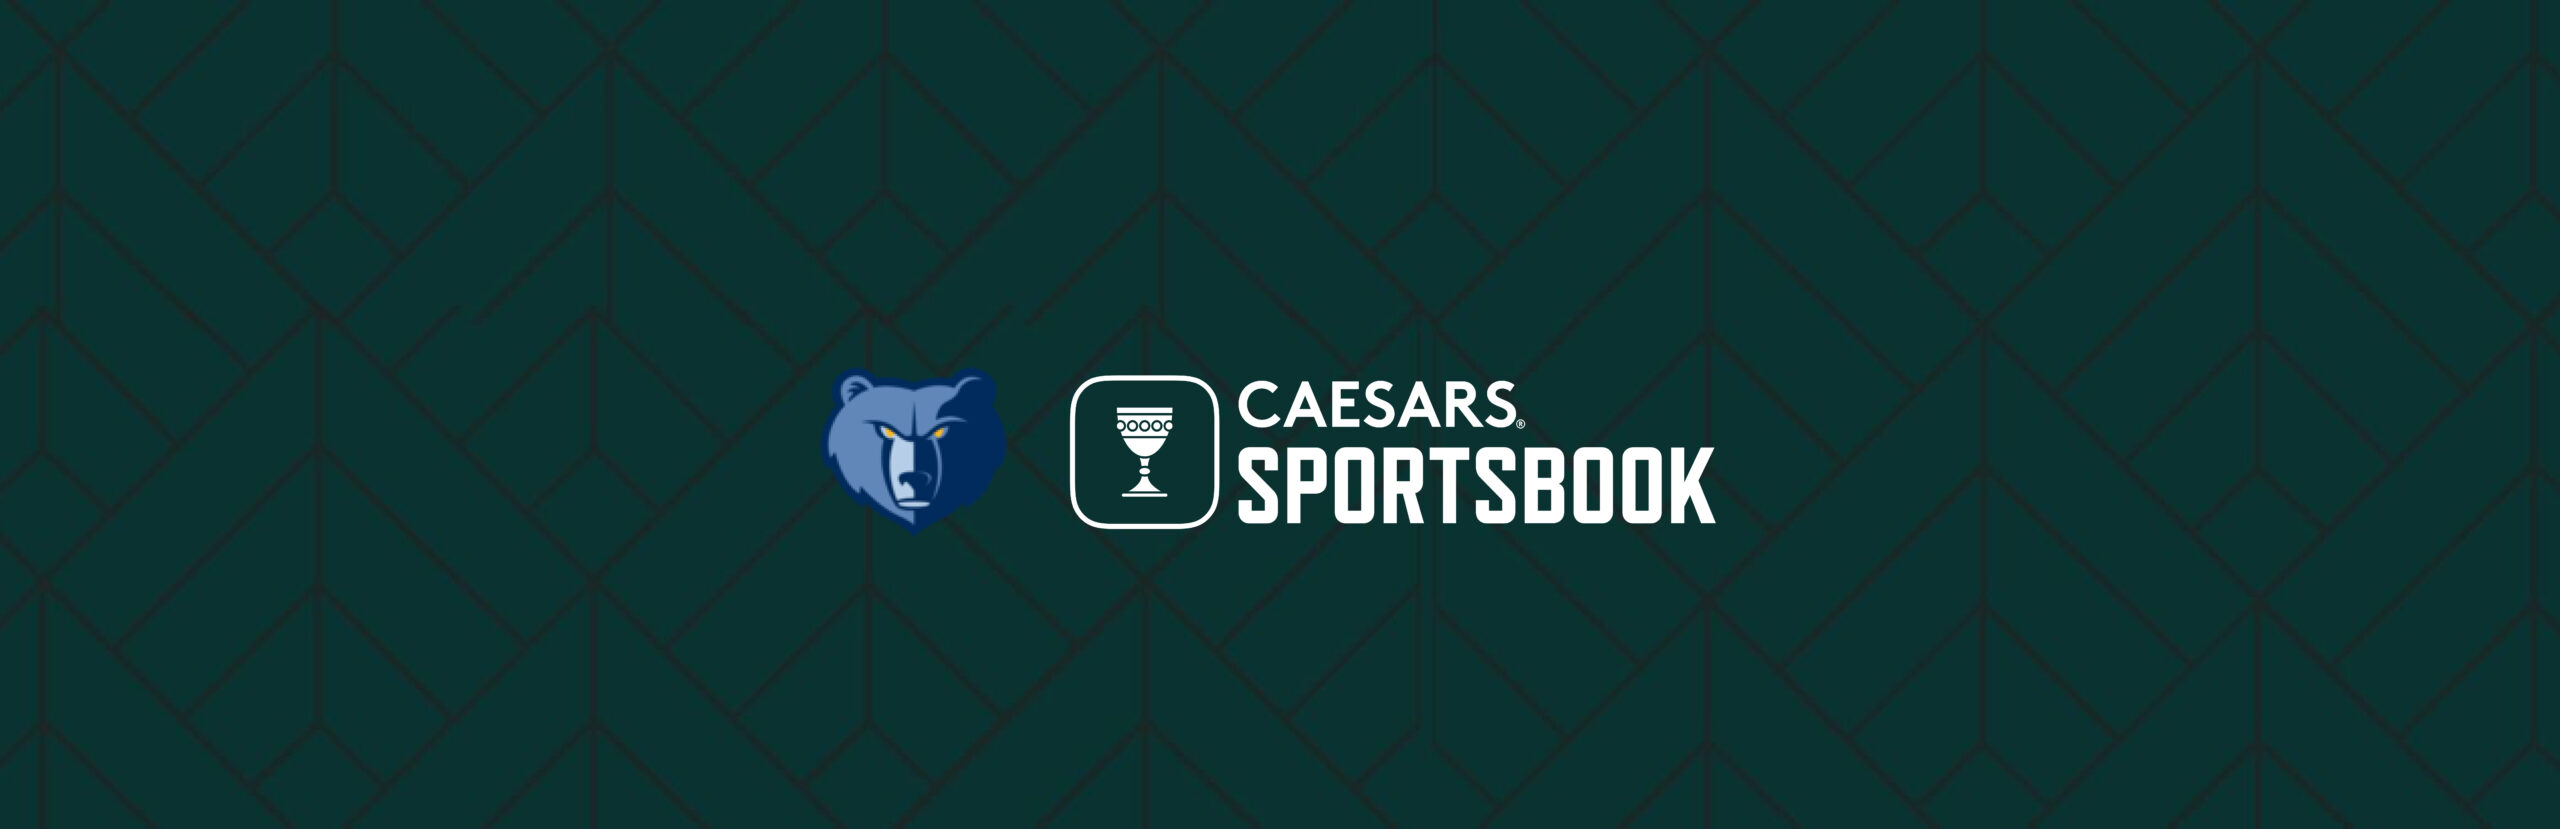 Caesars Sportsbook, Memphis Grizzlies Announce Multi-Year Partnership article feature image